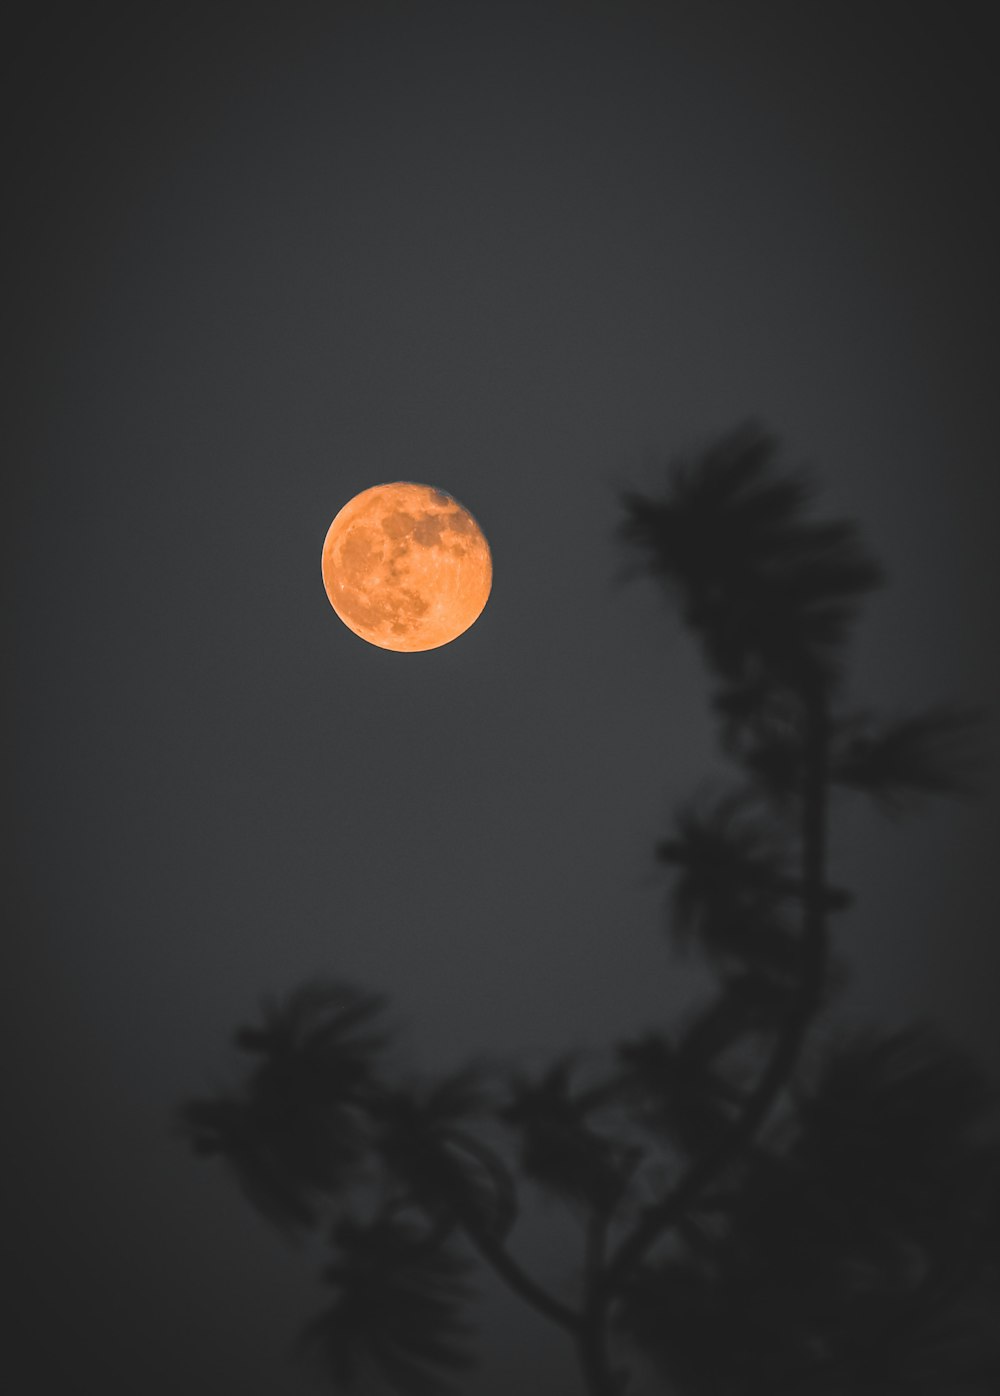 Luna piena nel cielo notturno